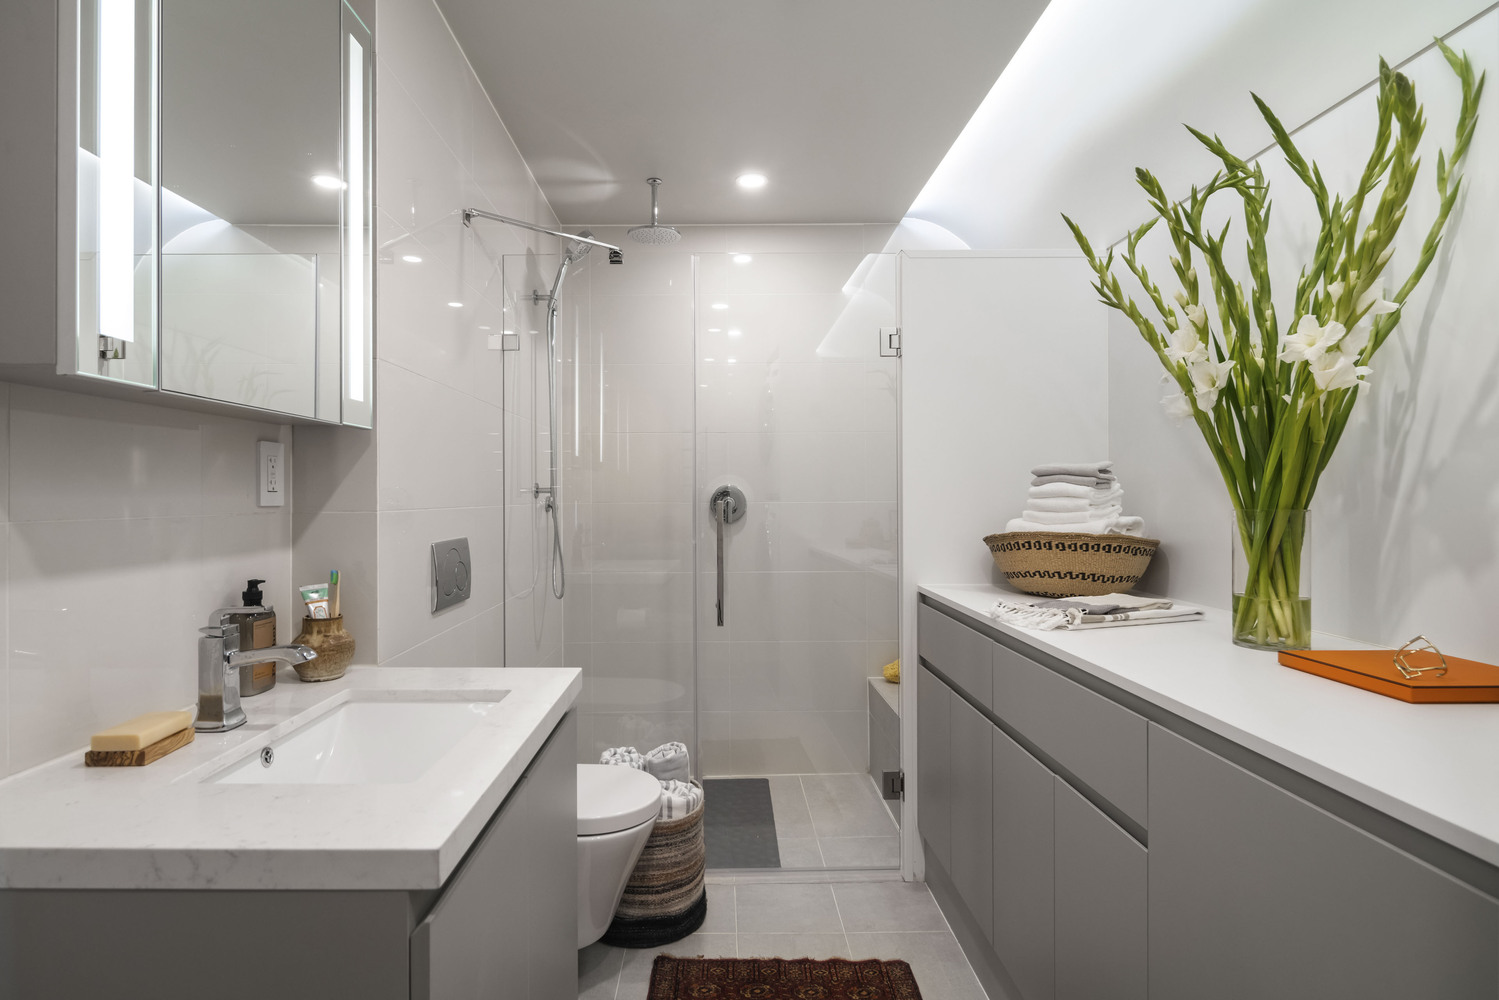 Designer selected plumbing fixtures. Designer selected ceramic tile in shower. Elegant mirrored medicine cabinet. Custom cabinetry. Quartz countertops. Vanity.